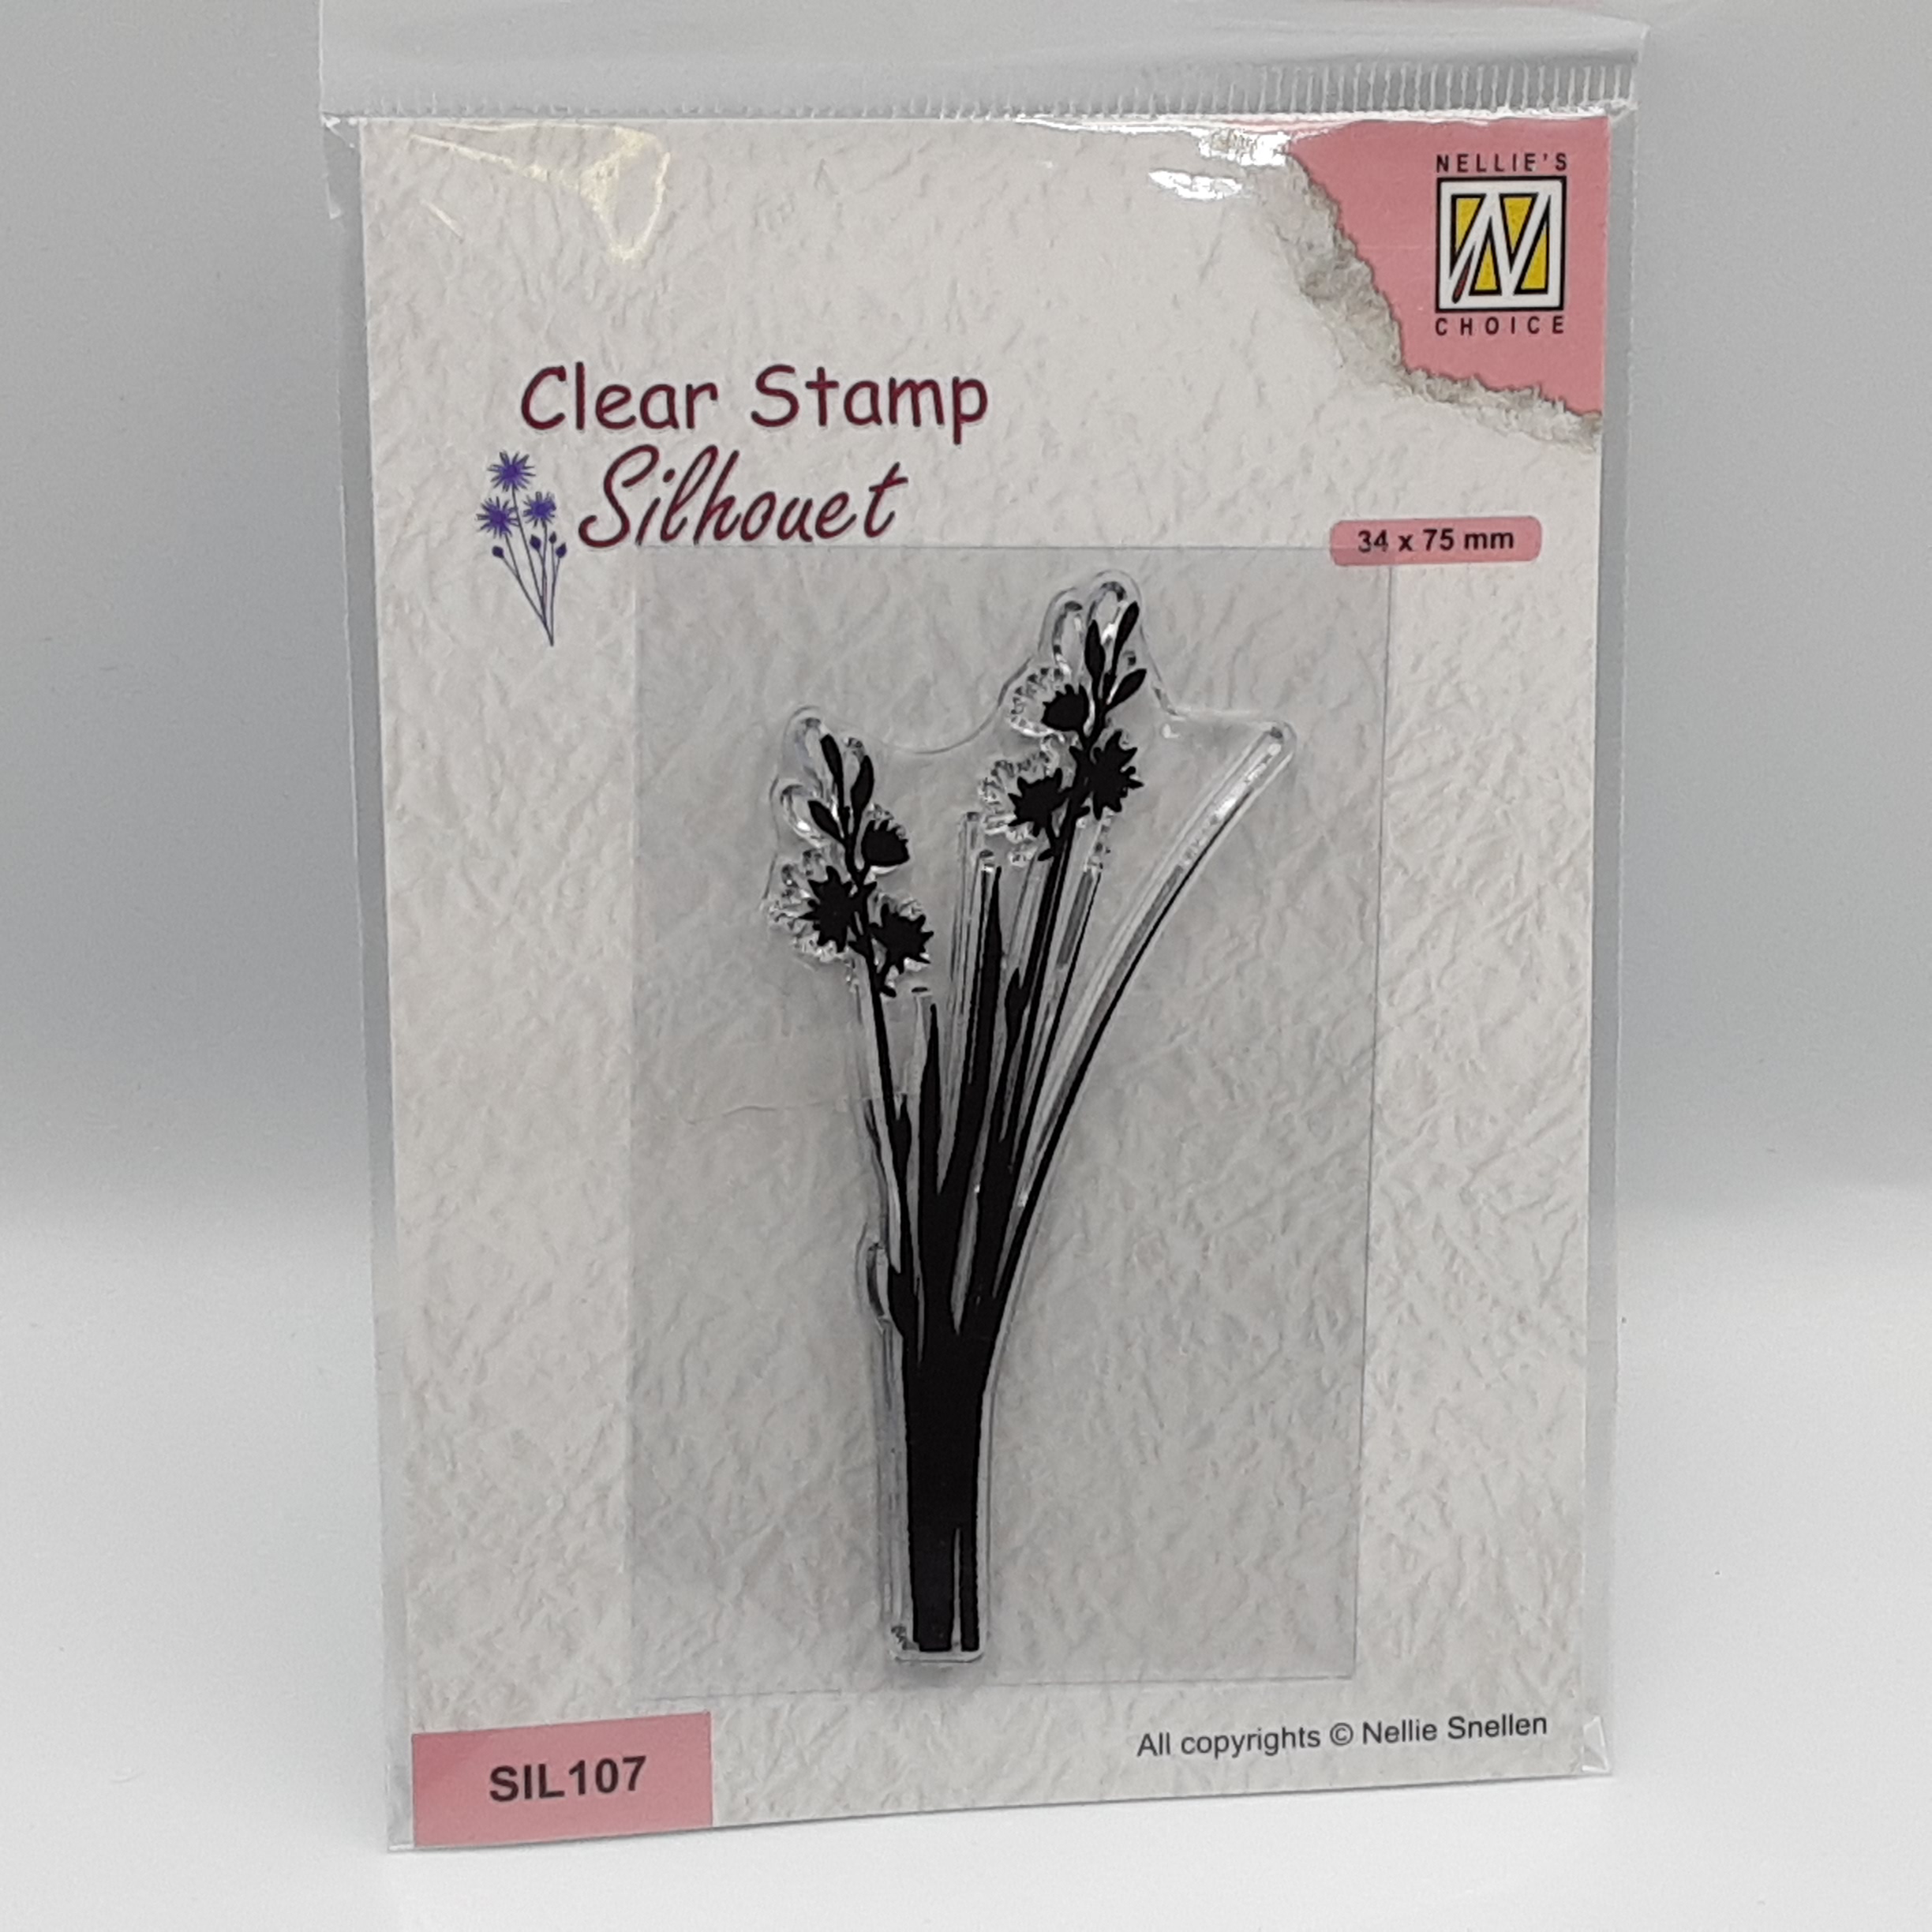 Silhouette bloemen 20 clear stamp